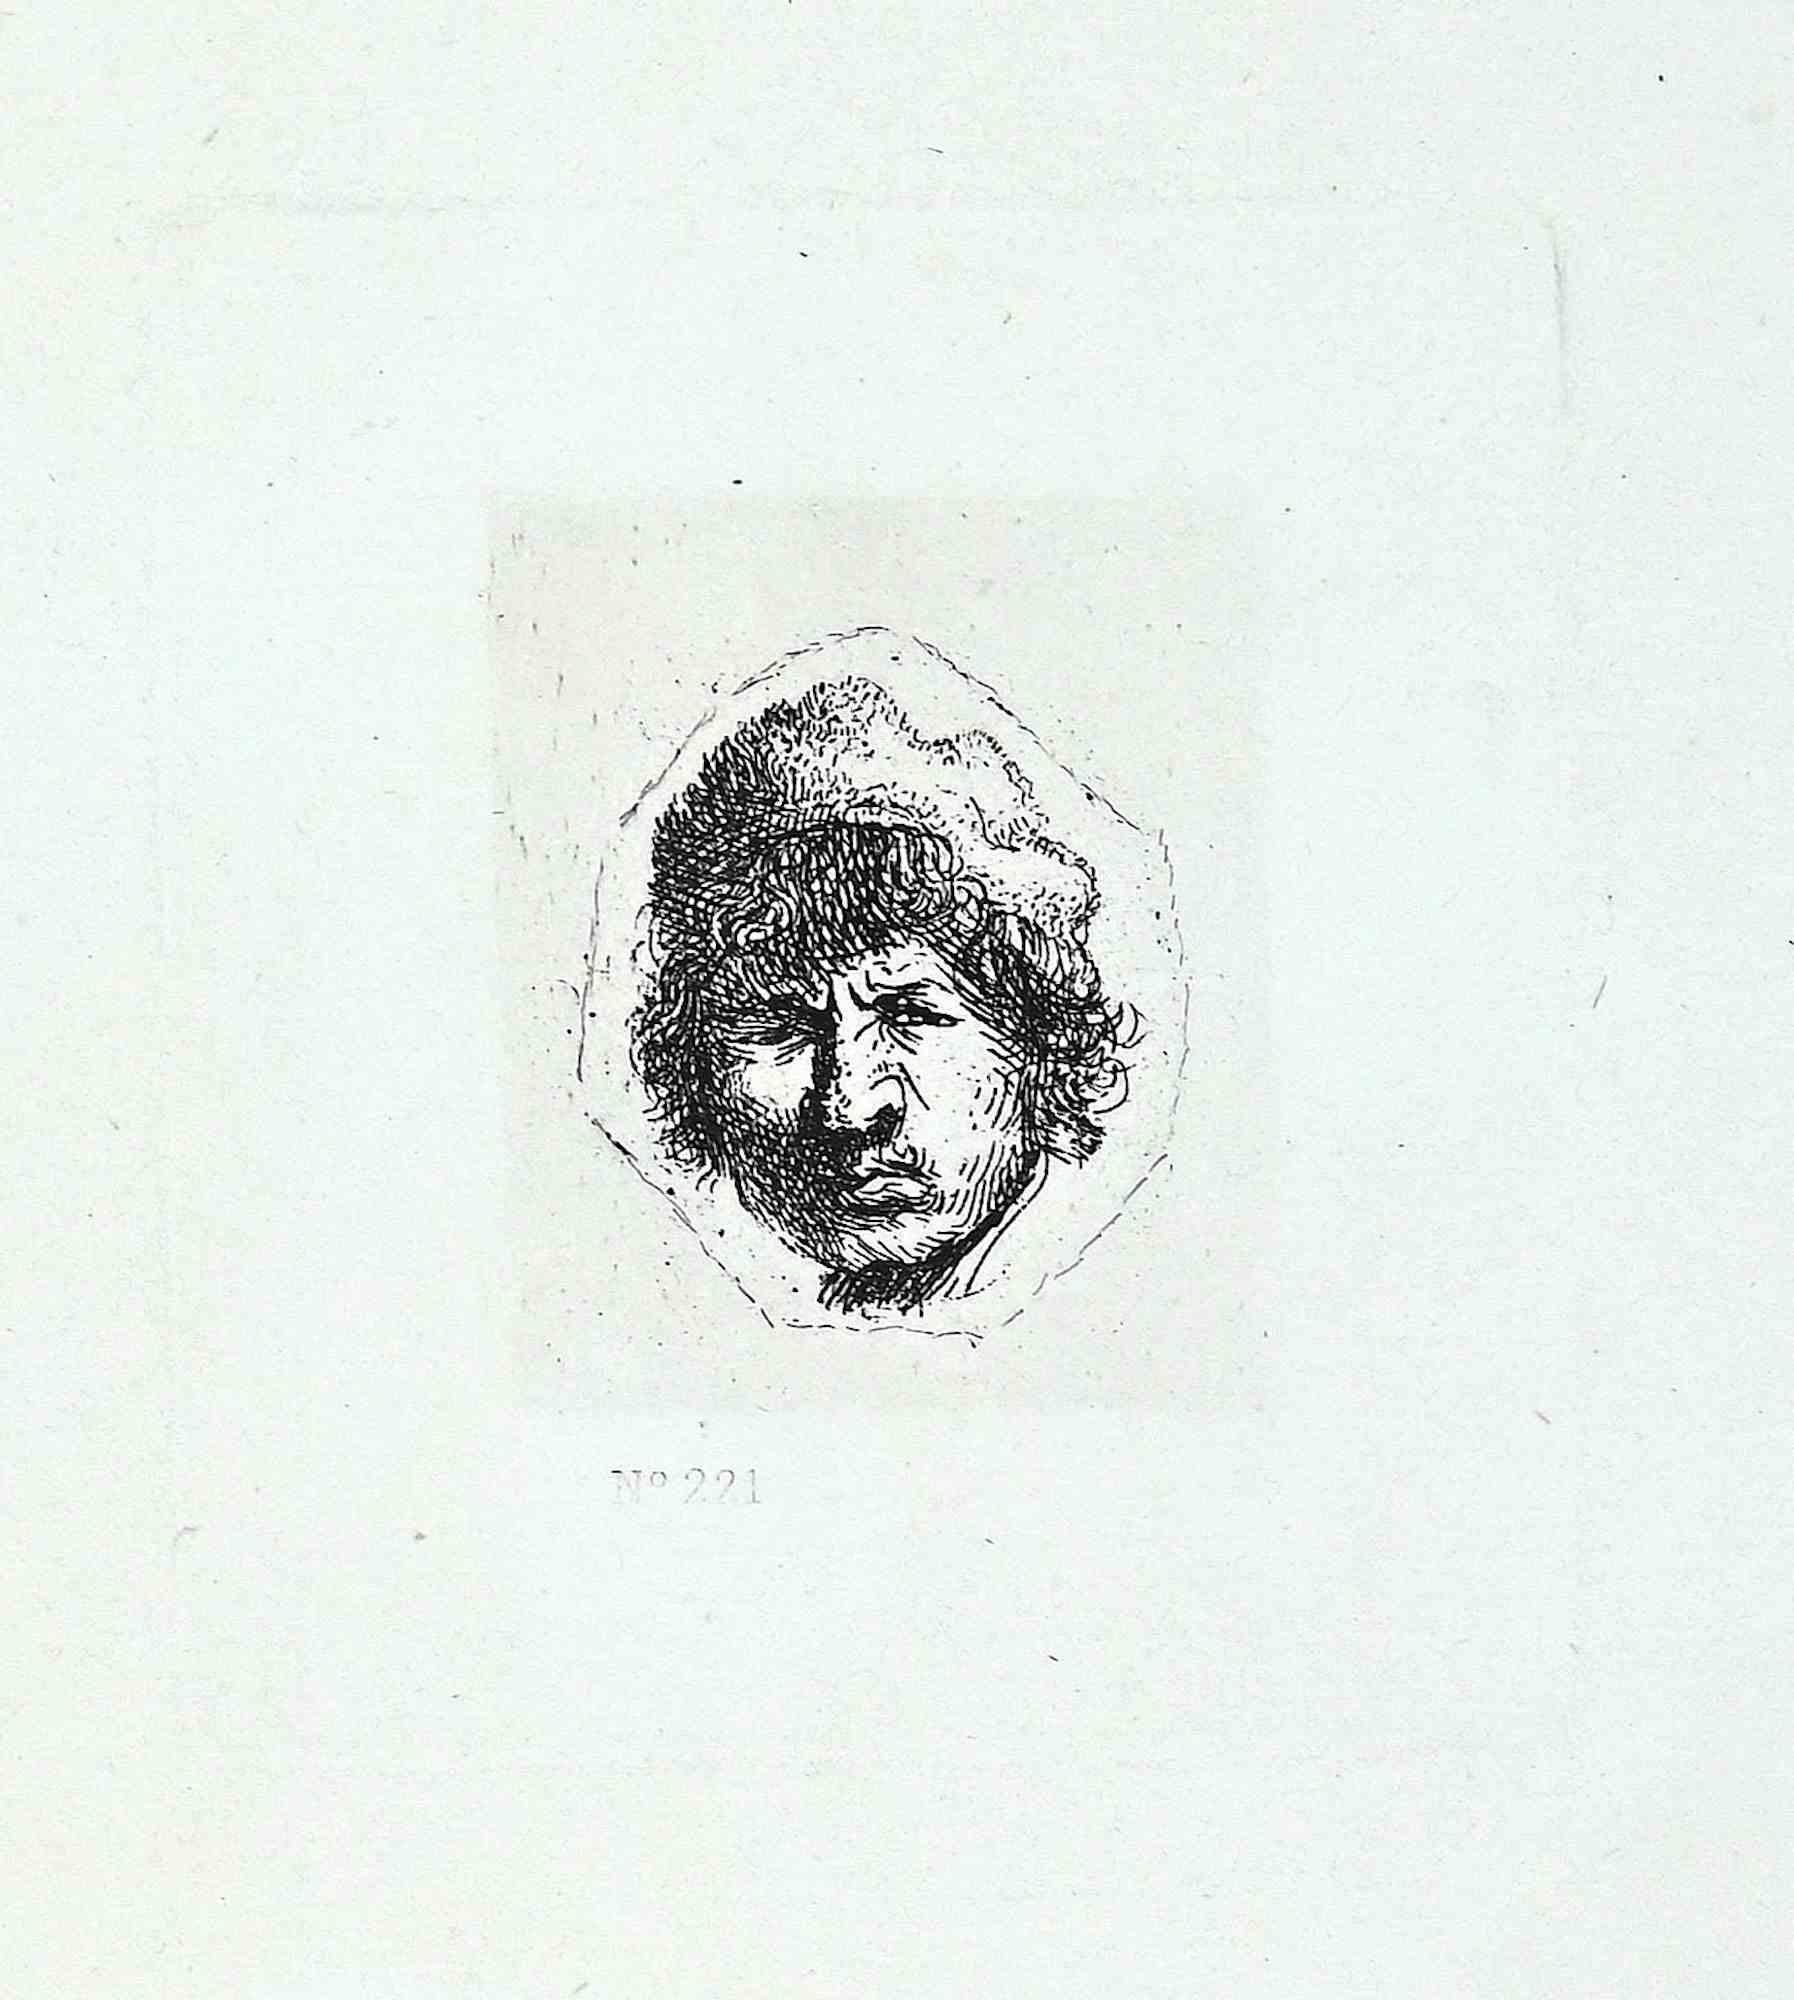 Charles Amand Durand Portrait Print - Self-Portrait, Stuurs kKijkend - Engraving after Rembrandt - 19th Century